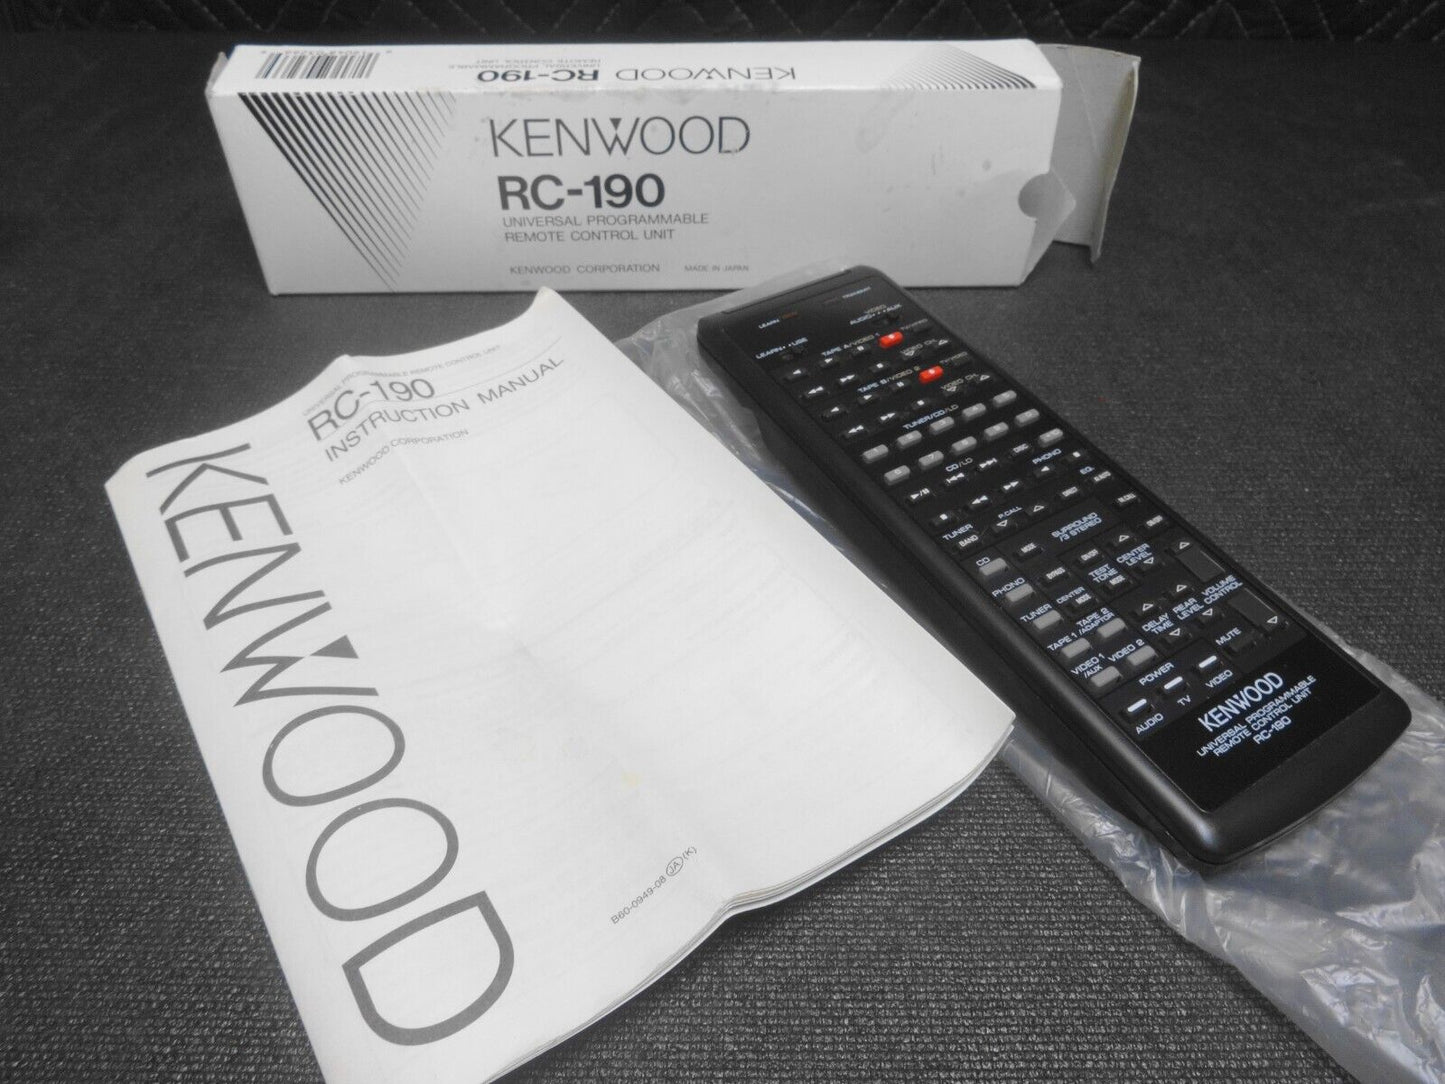 Kenwood Rc-190 Universal Learning Remote Control Kc992 DPR 892 Ka892 Kc922